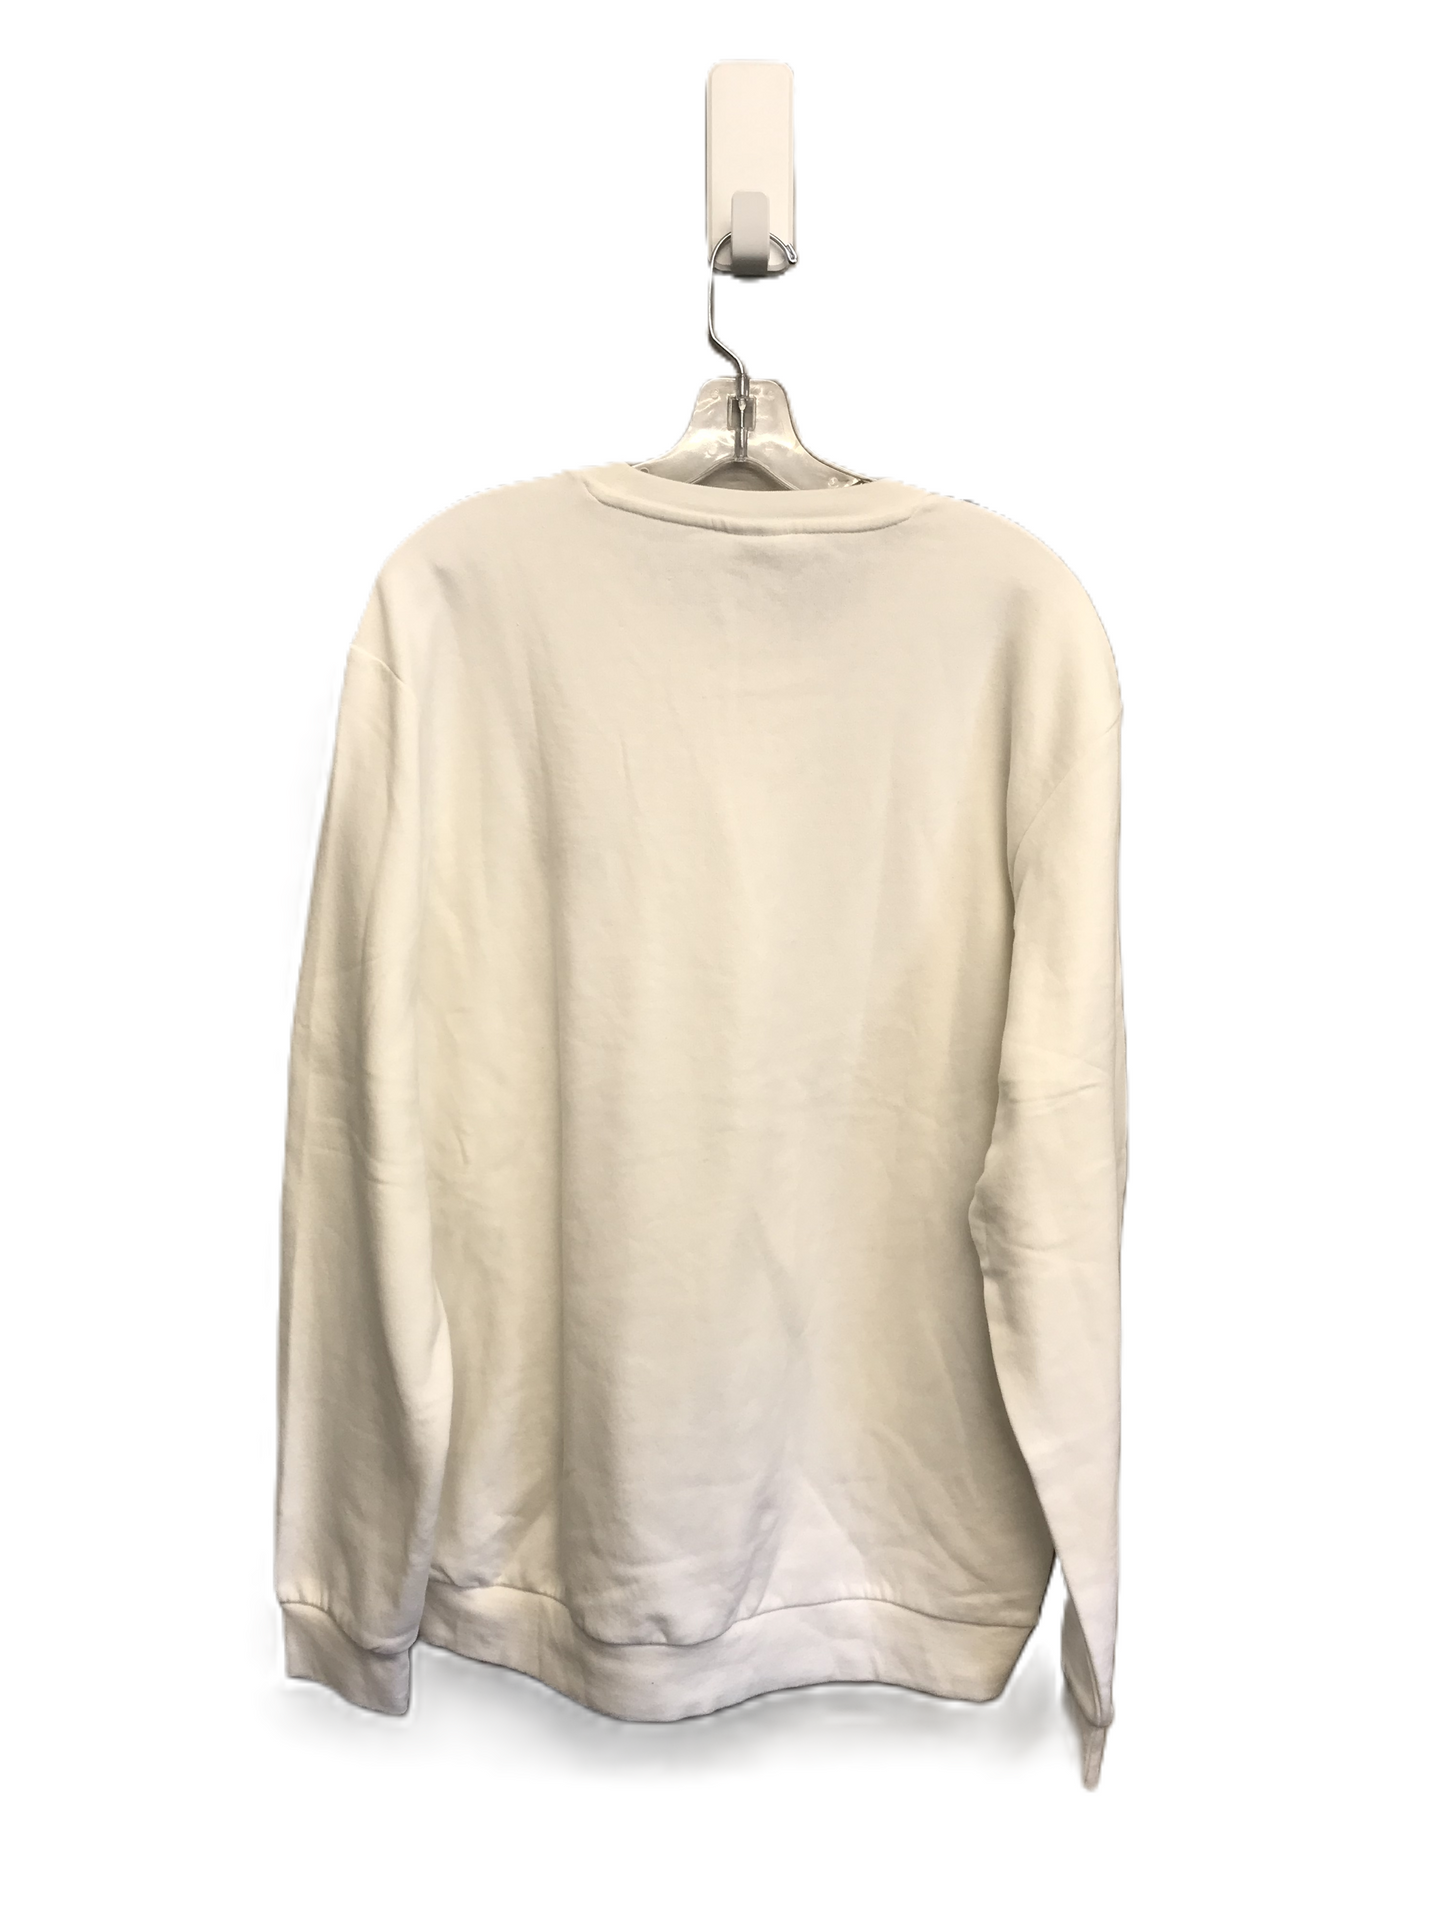 White Sweatshirt Crewneck By Adidas, Size: Xl